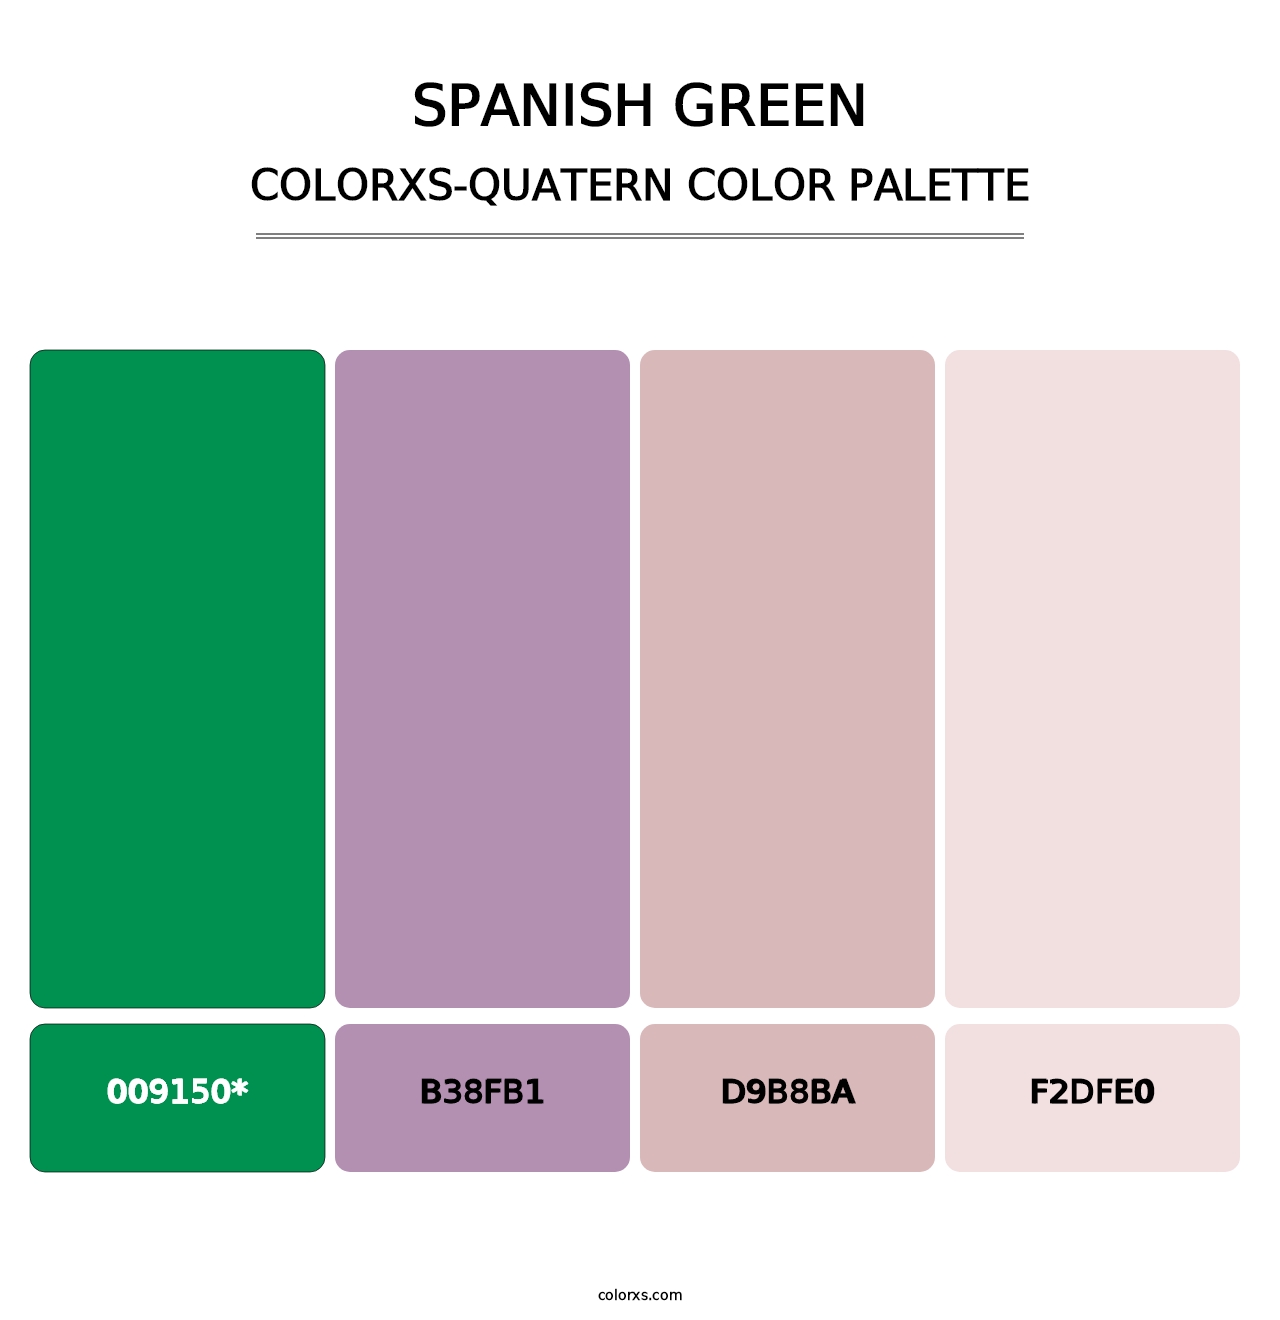 Spanish Green - Colorxs Quatern Palette